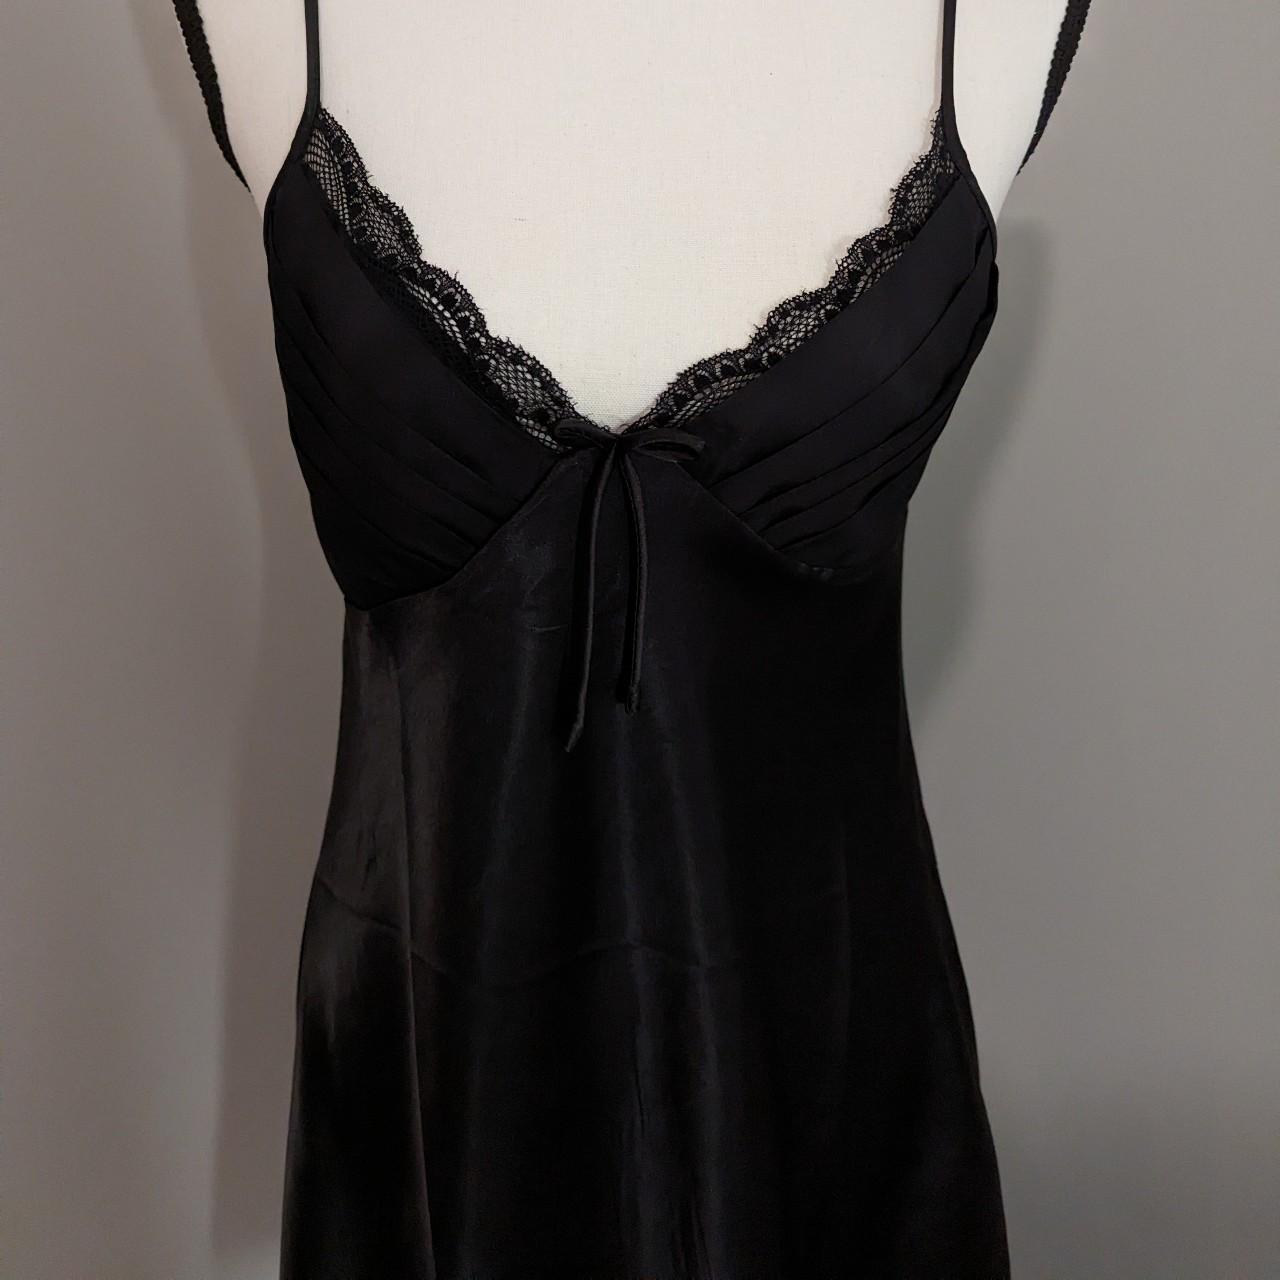 Satin black nightgown slip babydoll lingerie gown... - Depop